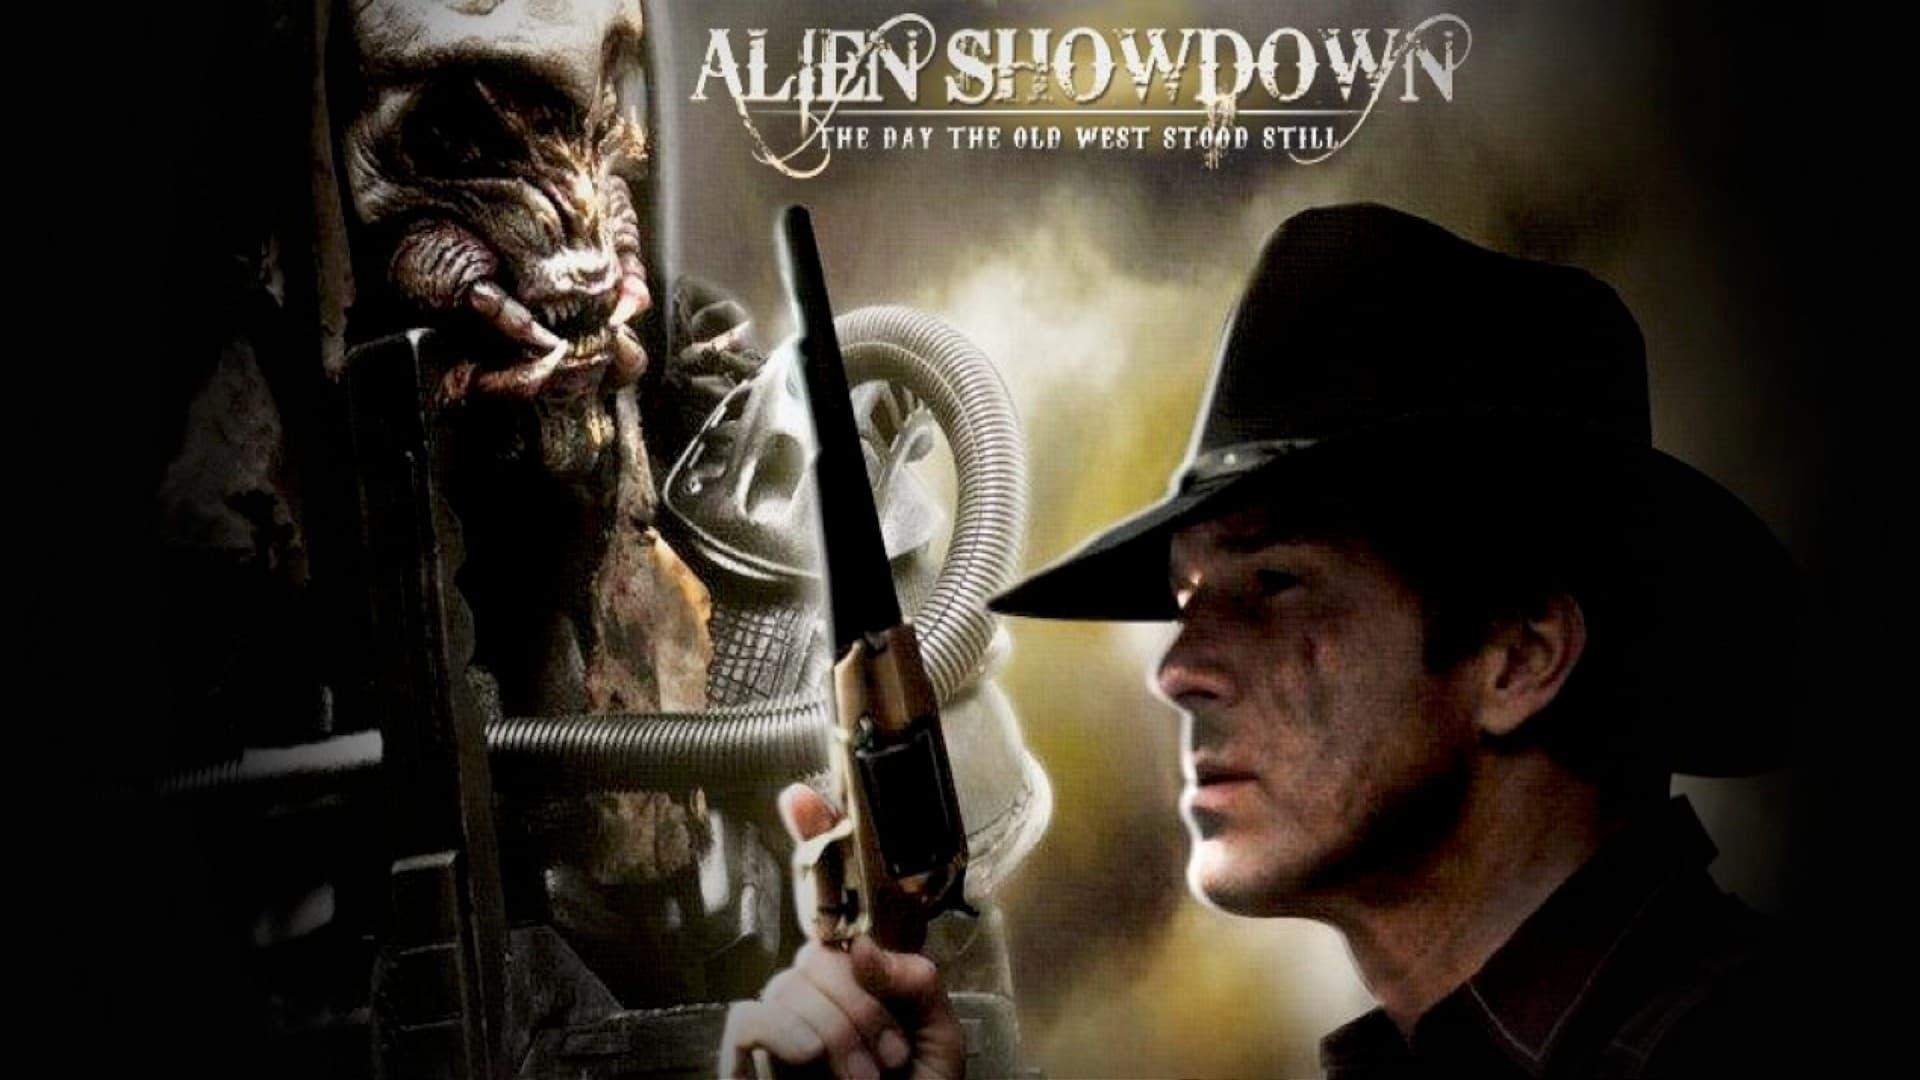 Alien Showdown: The Day the Old West Stood Still backdrop